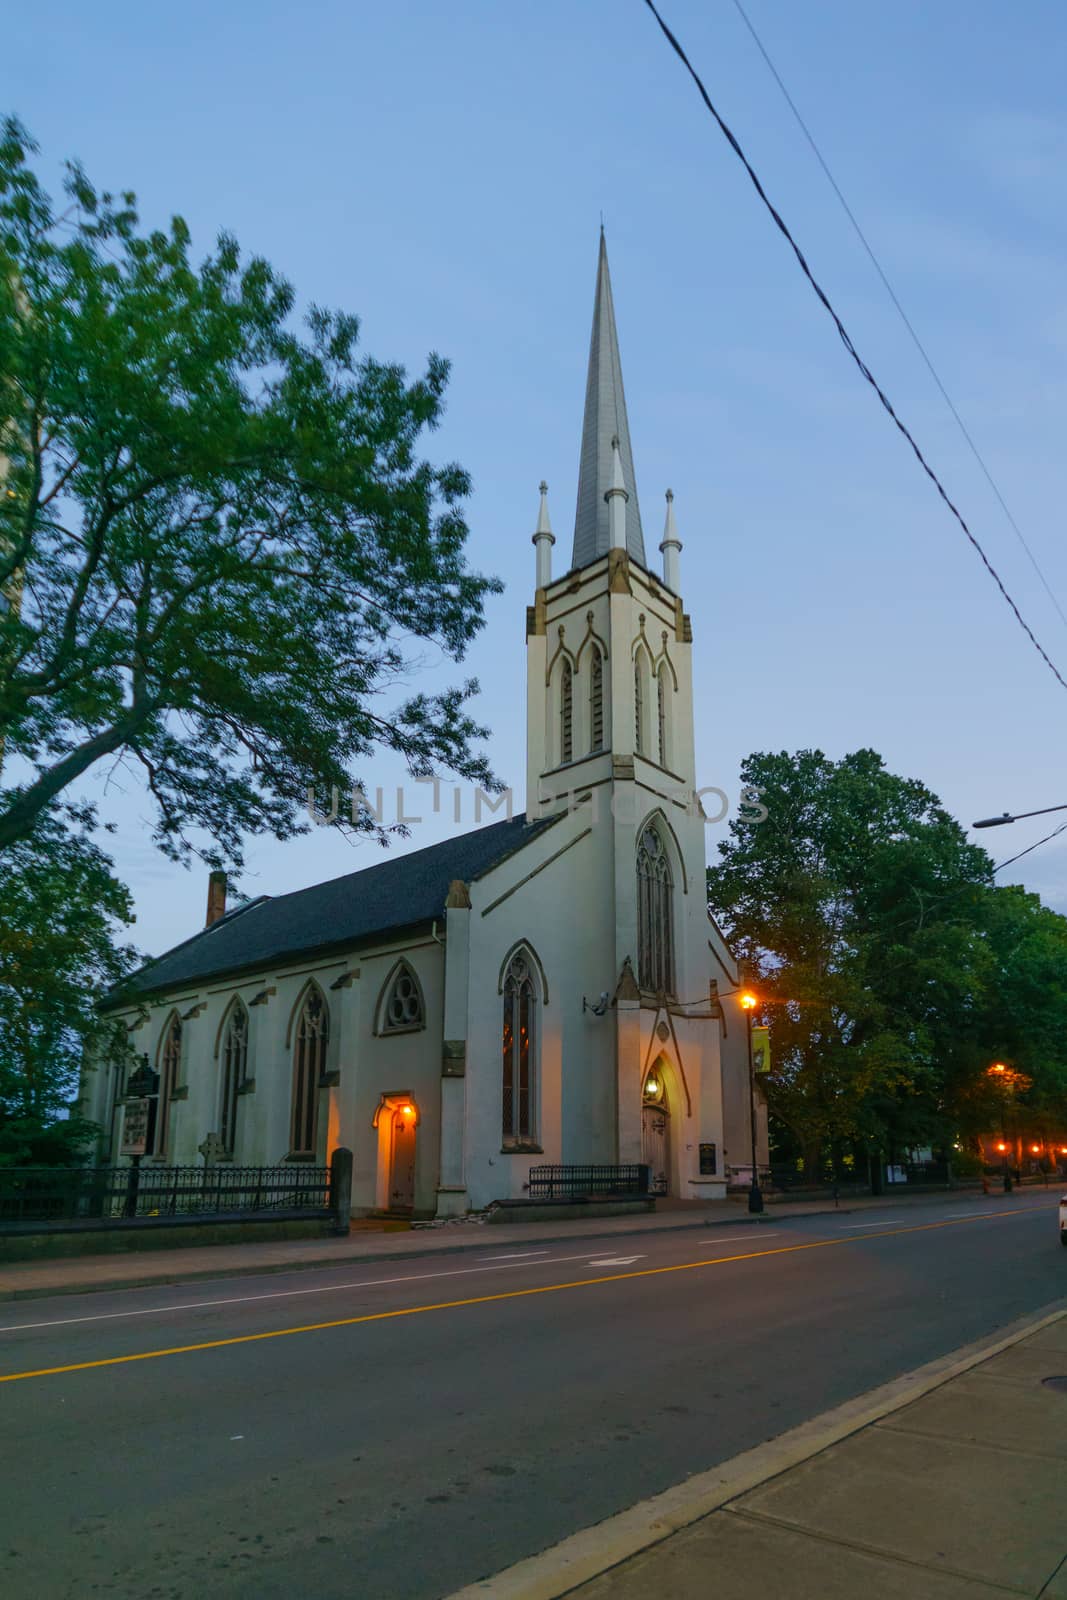 St Matthews United Church, in Halifax by RnDmS